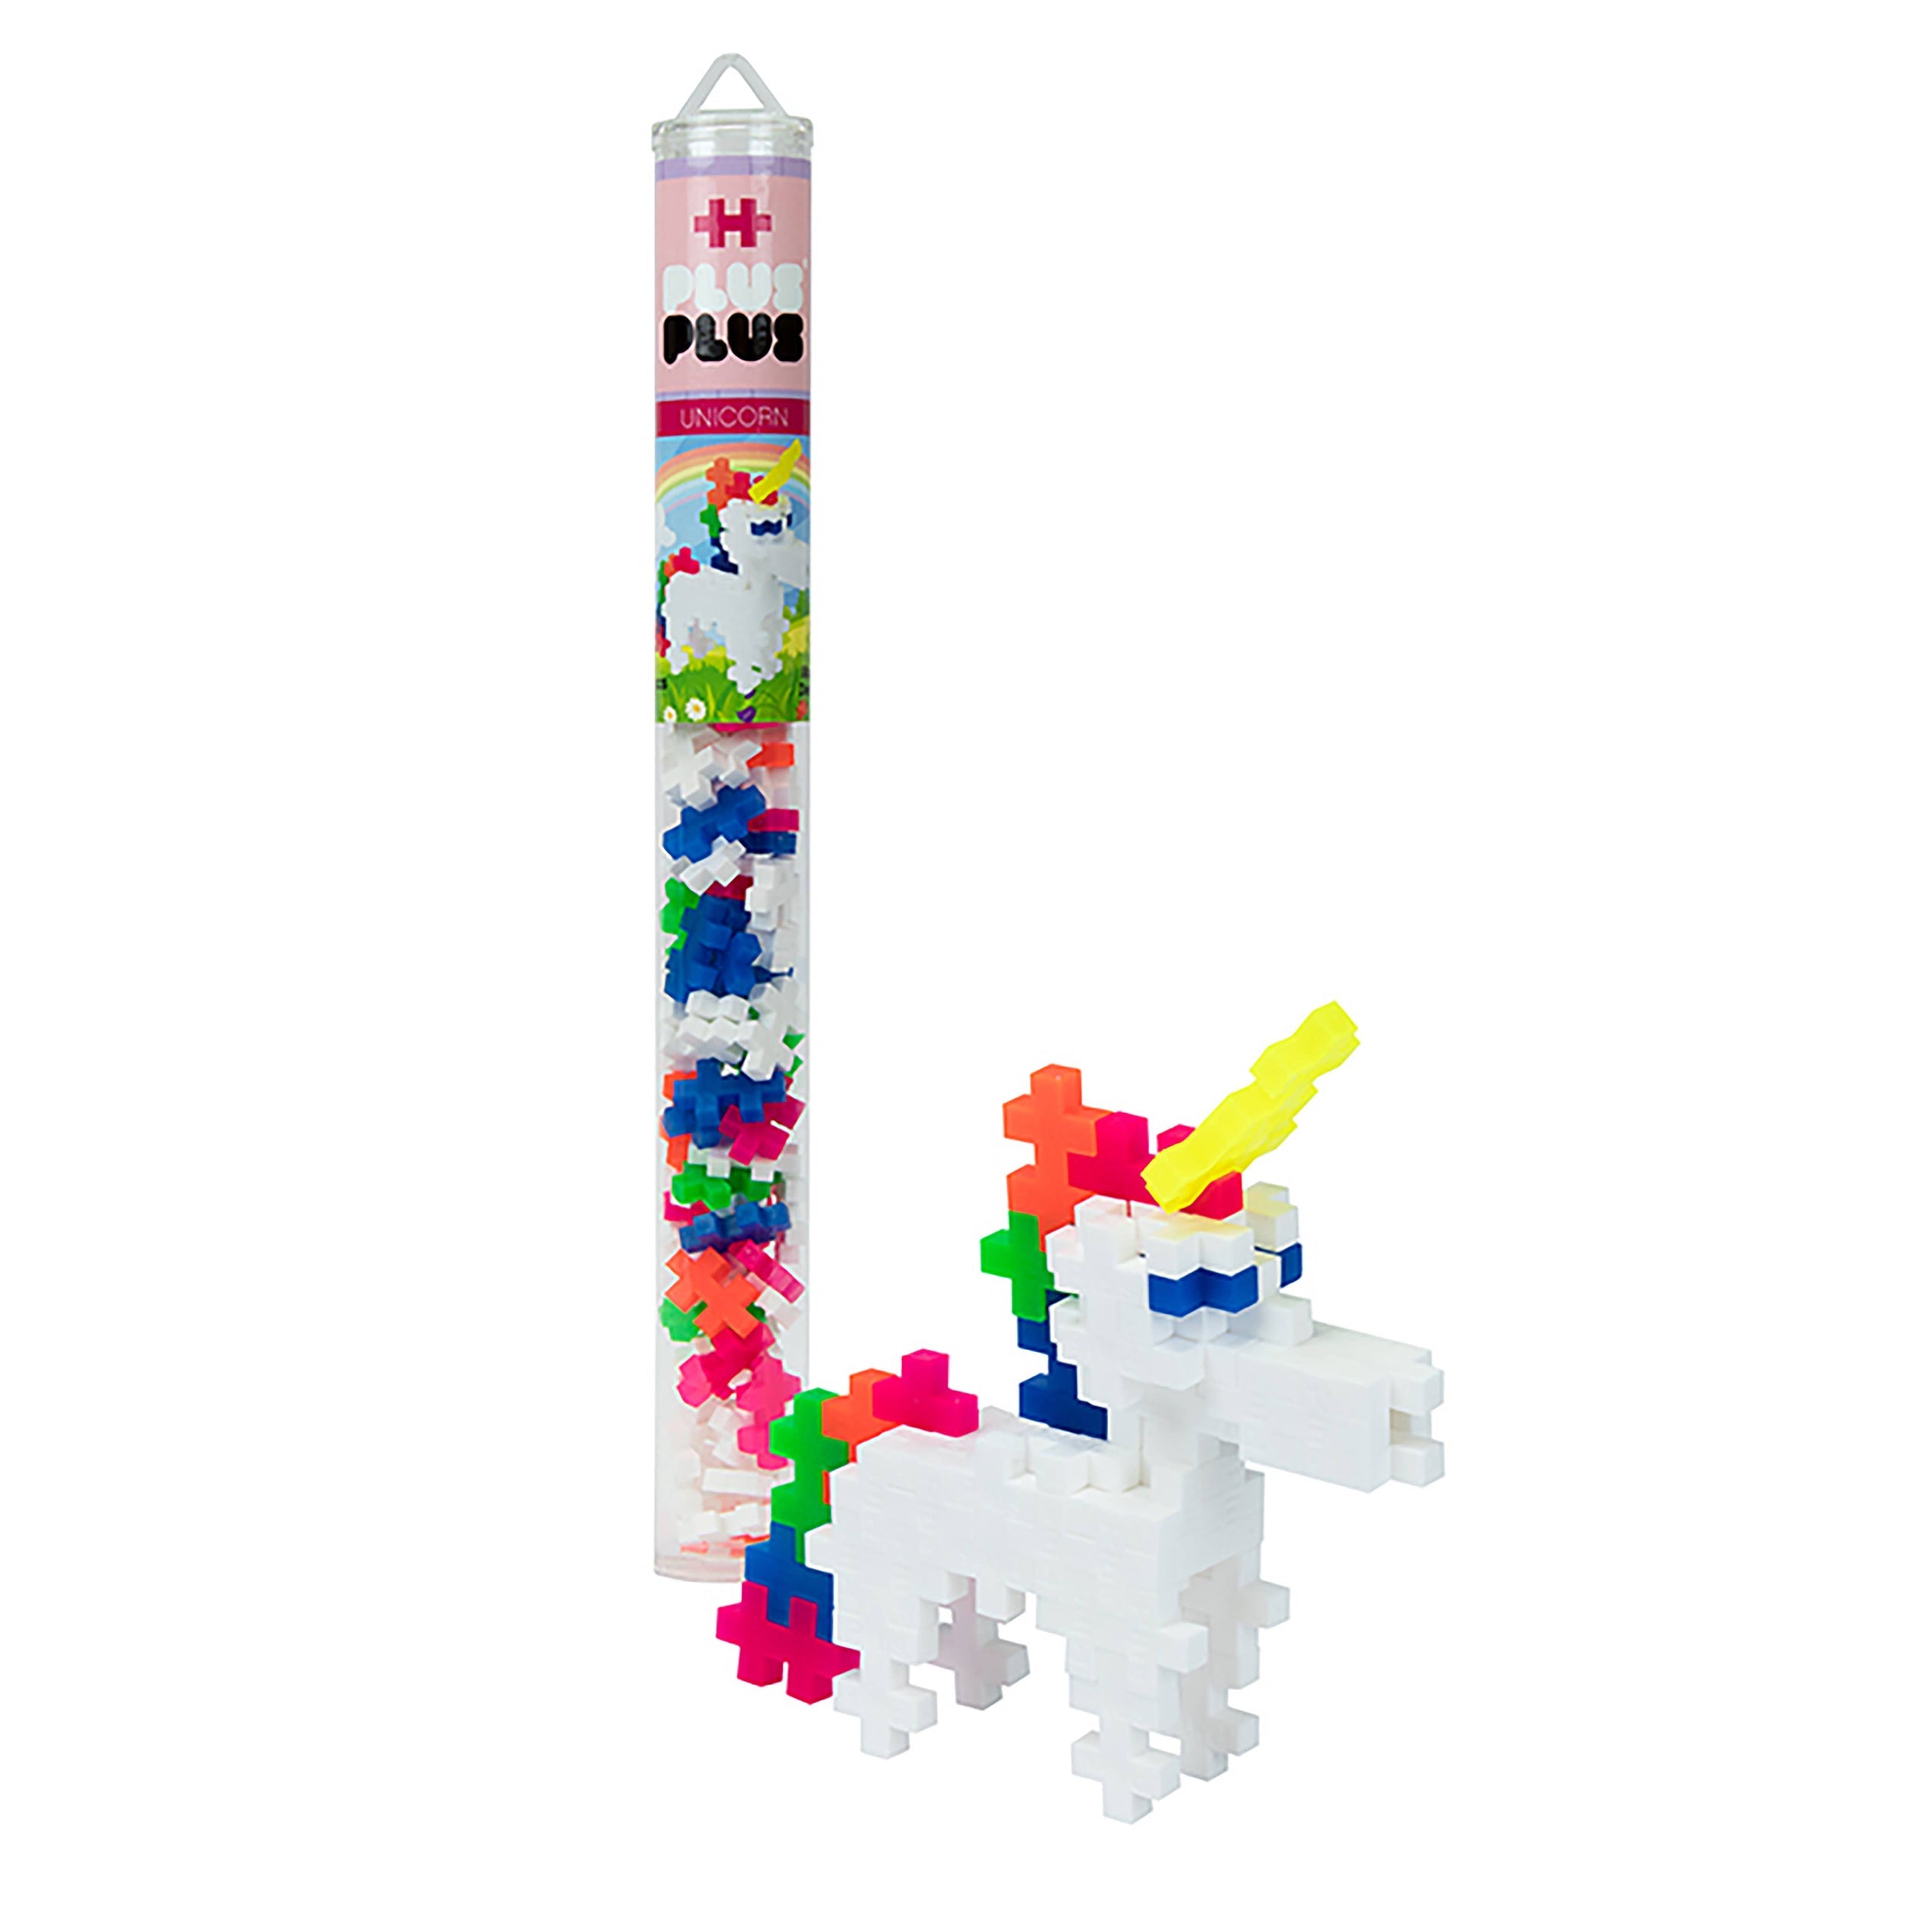 unicorn creative blocks toy